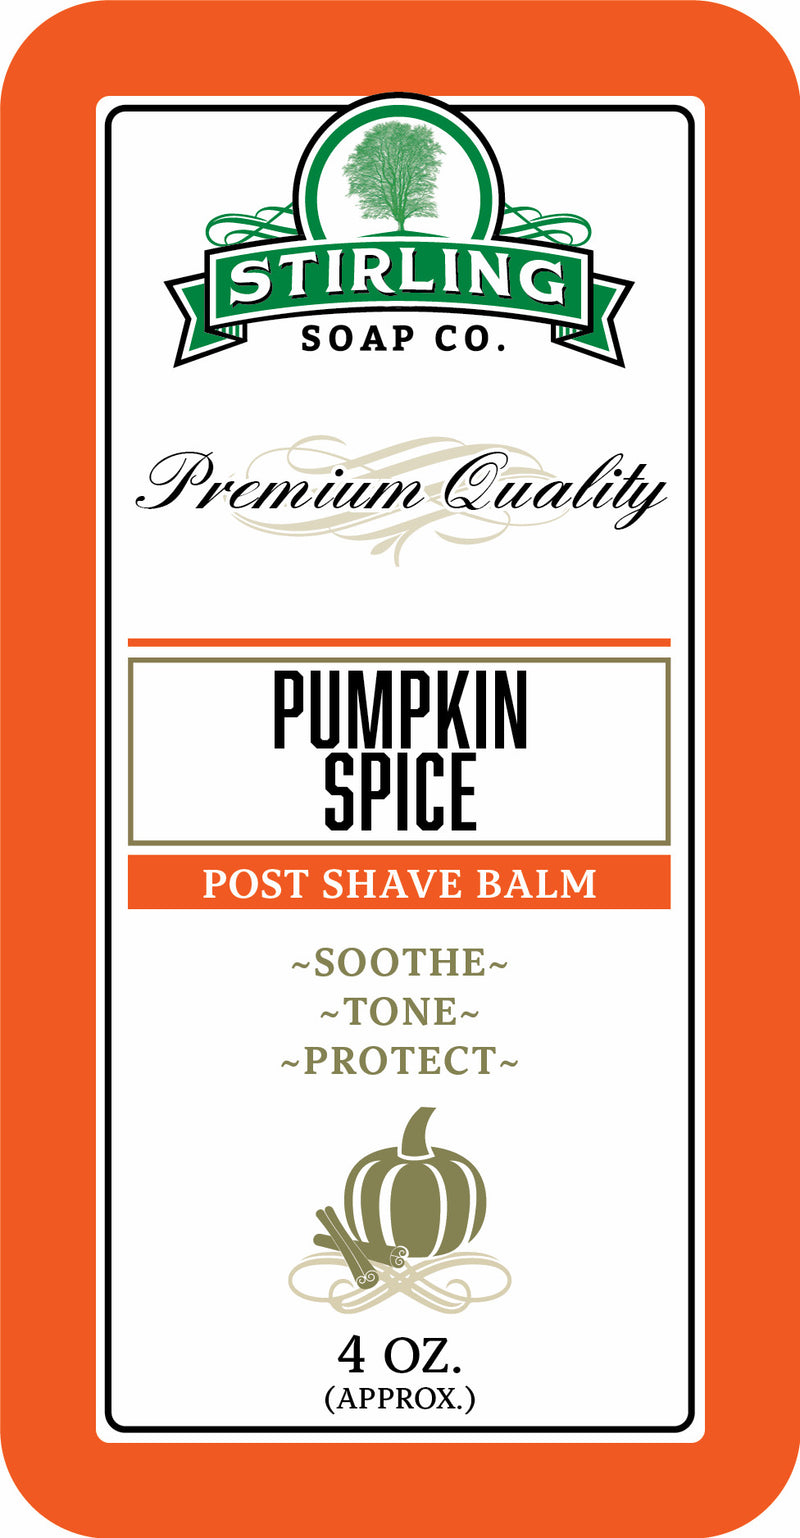 Pumpkin Spice - Post-Shave Balm